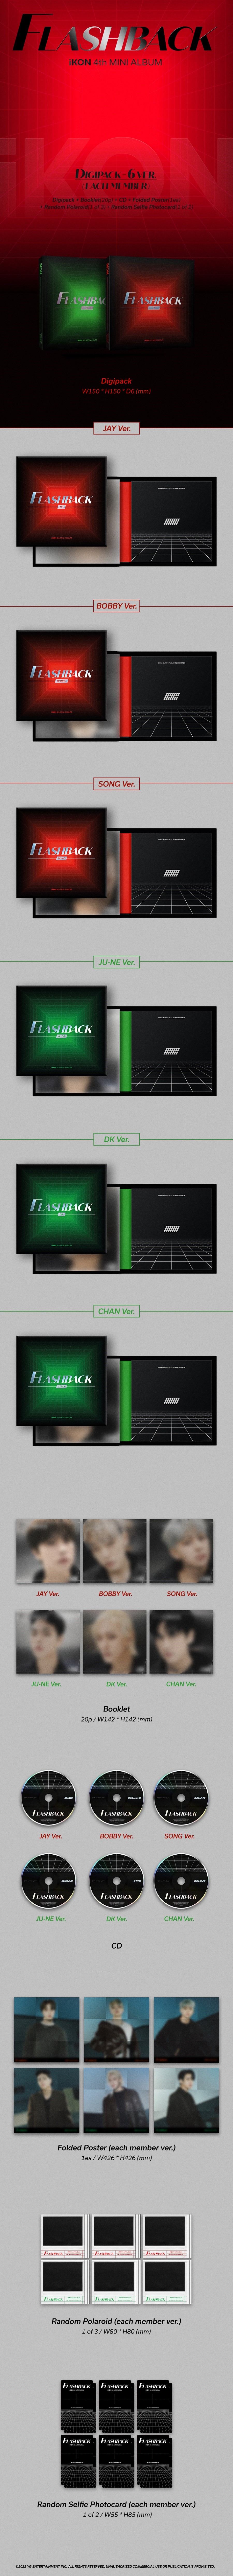 iKON(아이콘) - 4th MINI ALBUM FLASHBACK [Digipack Ver. - 버전랜덤]